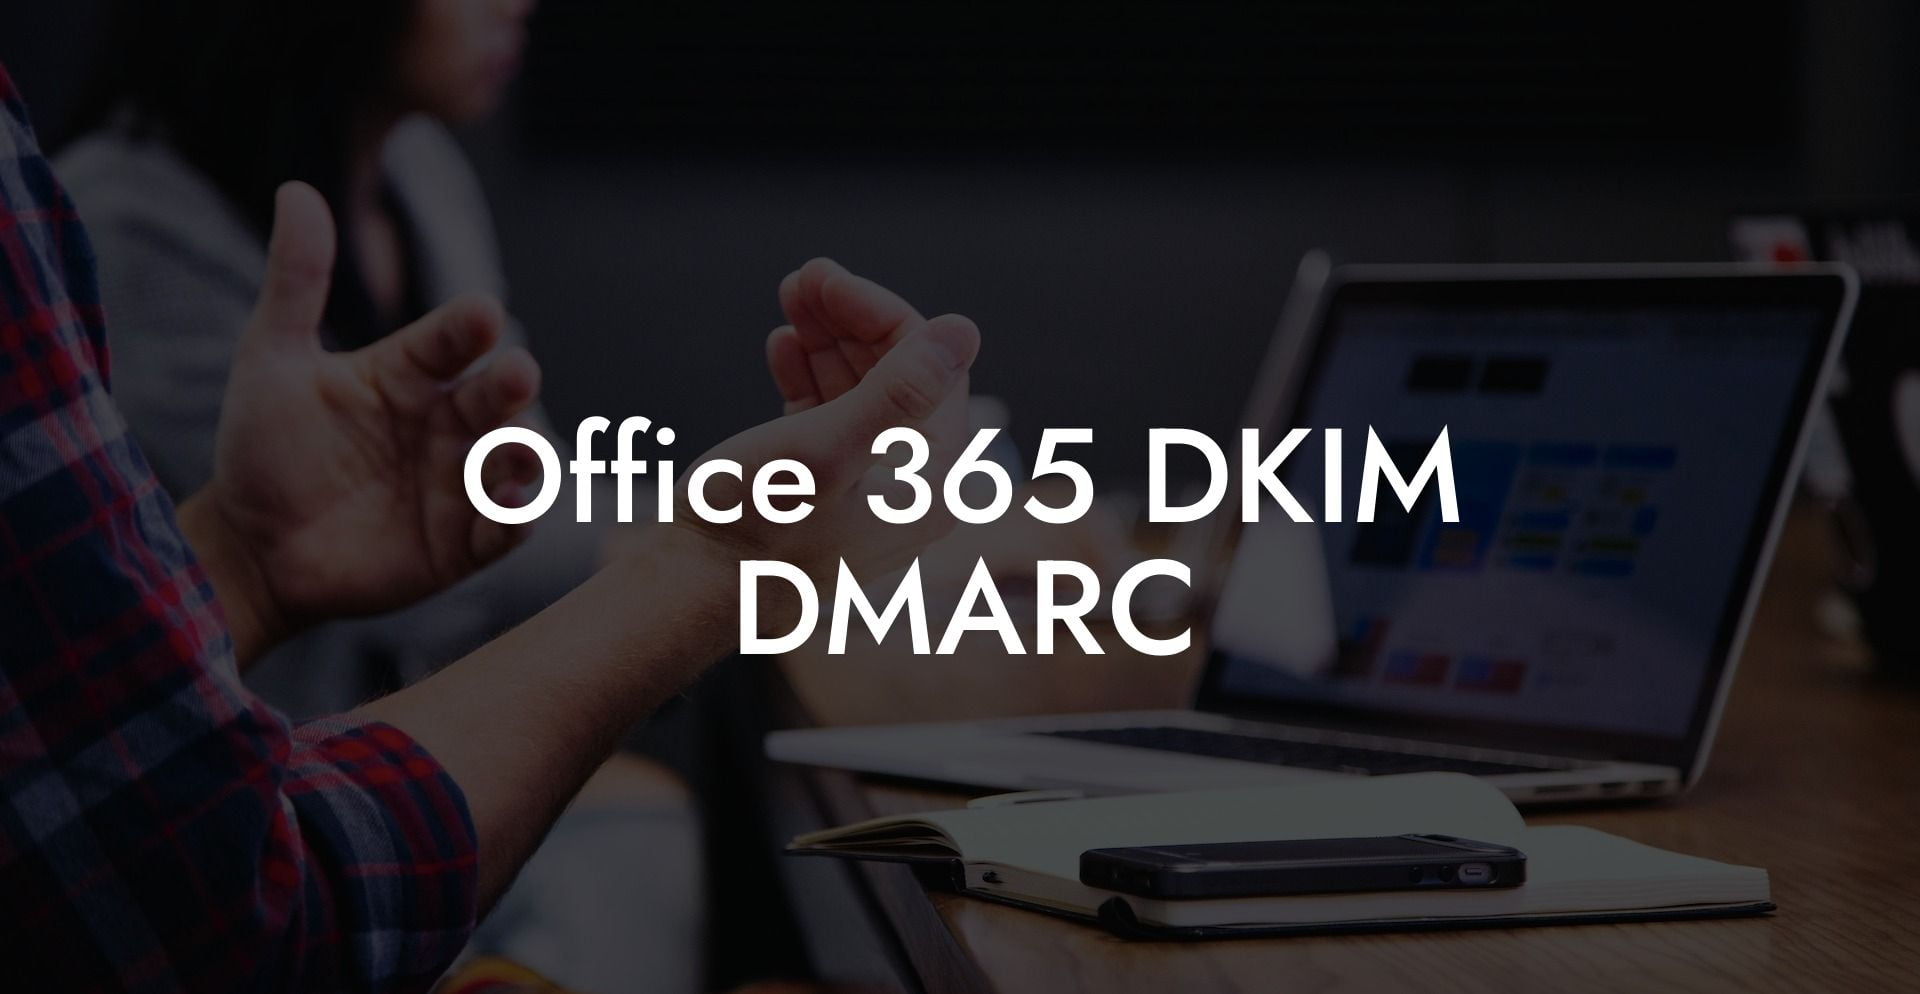 Office 365 DKIM DMARC